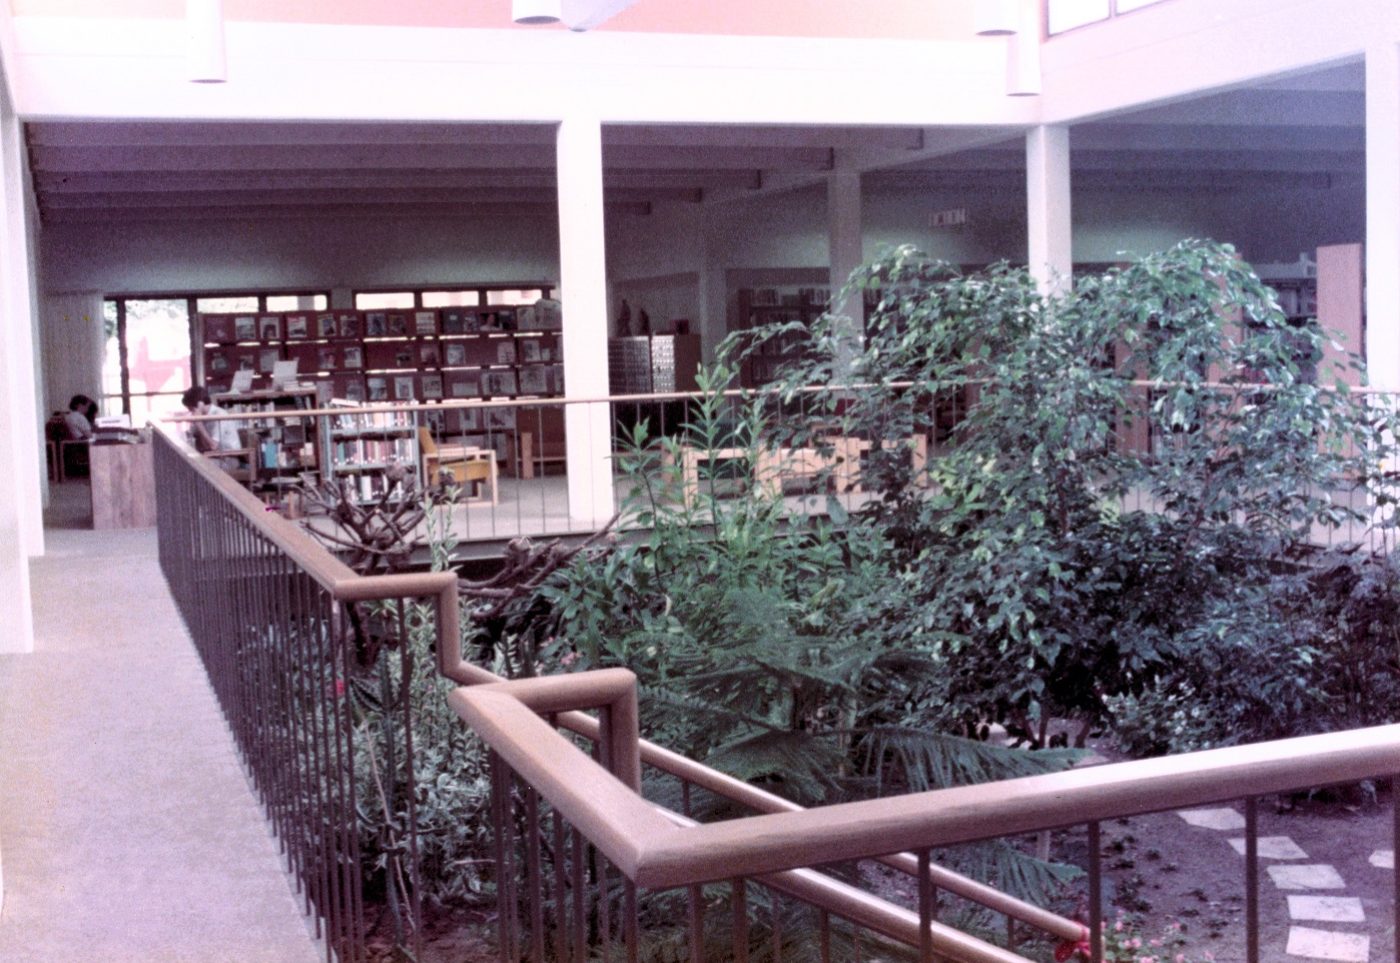 Denton Public Library